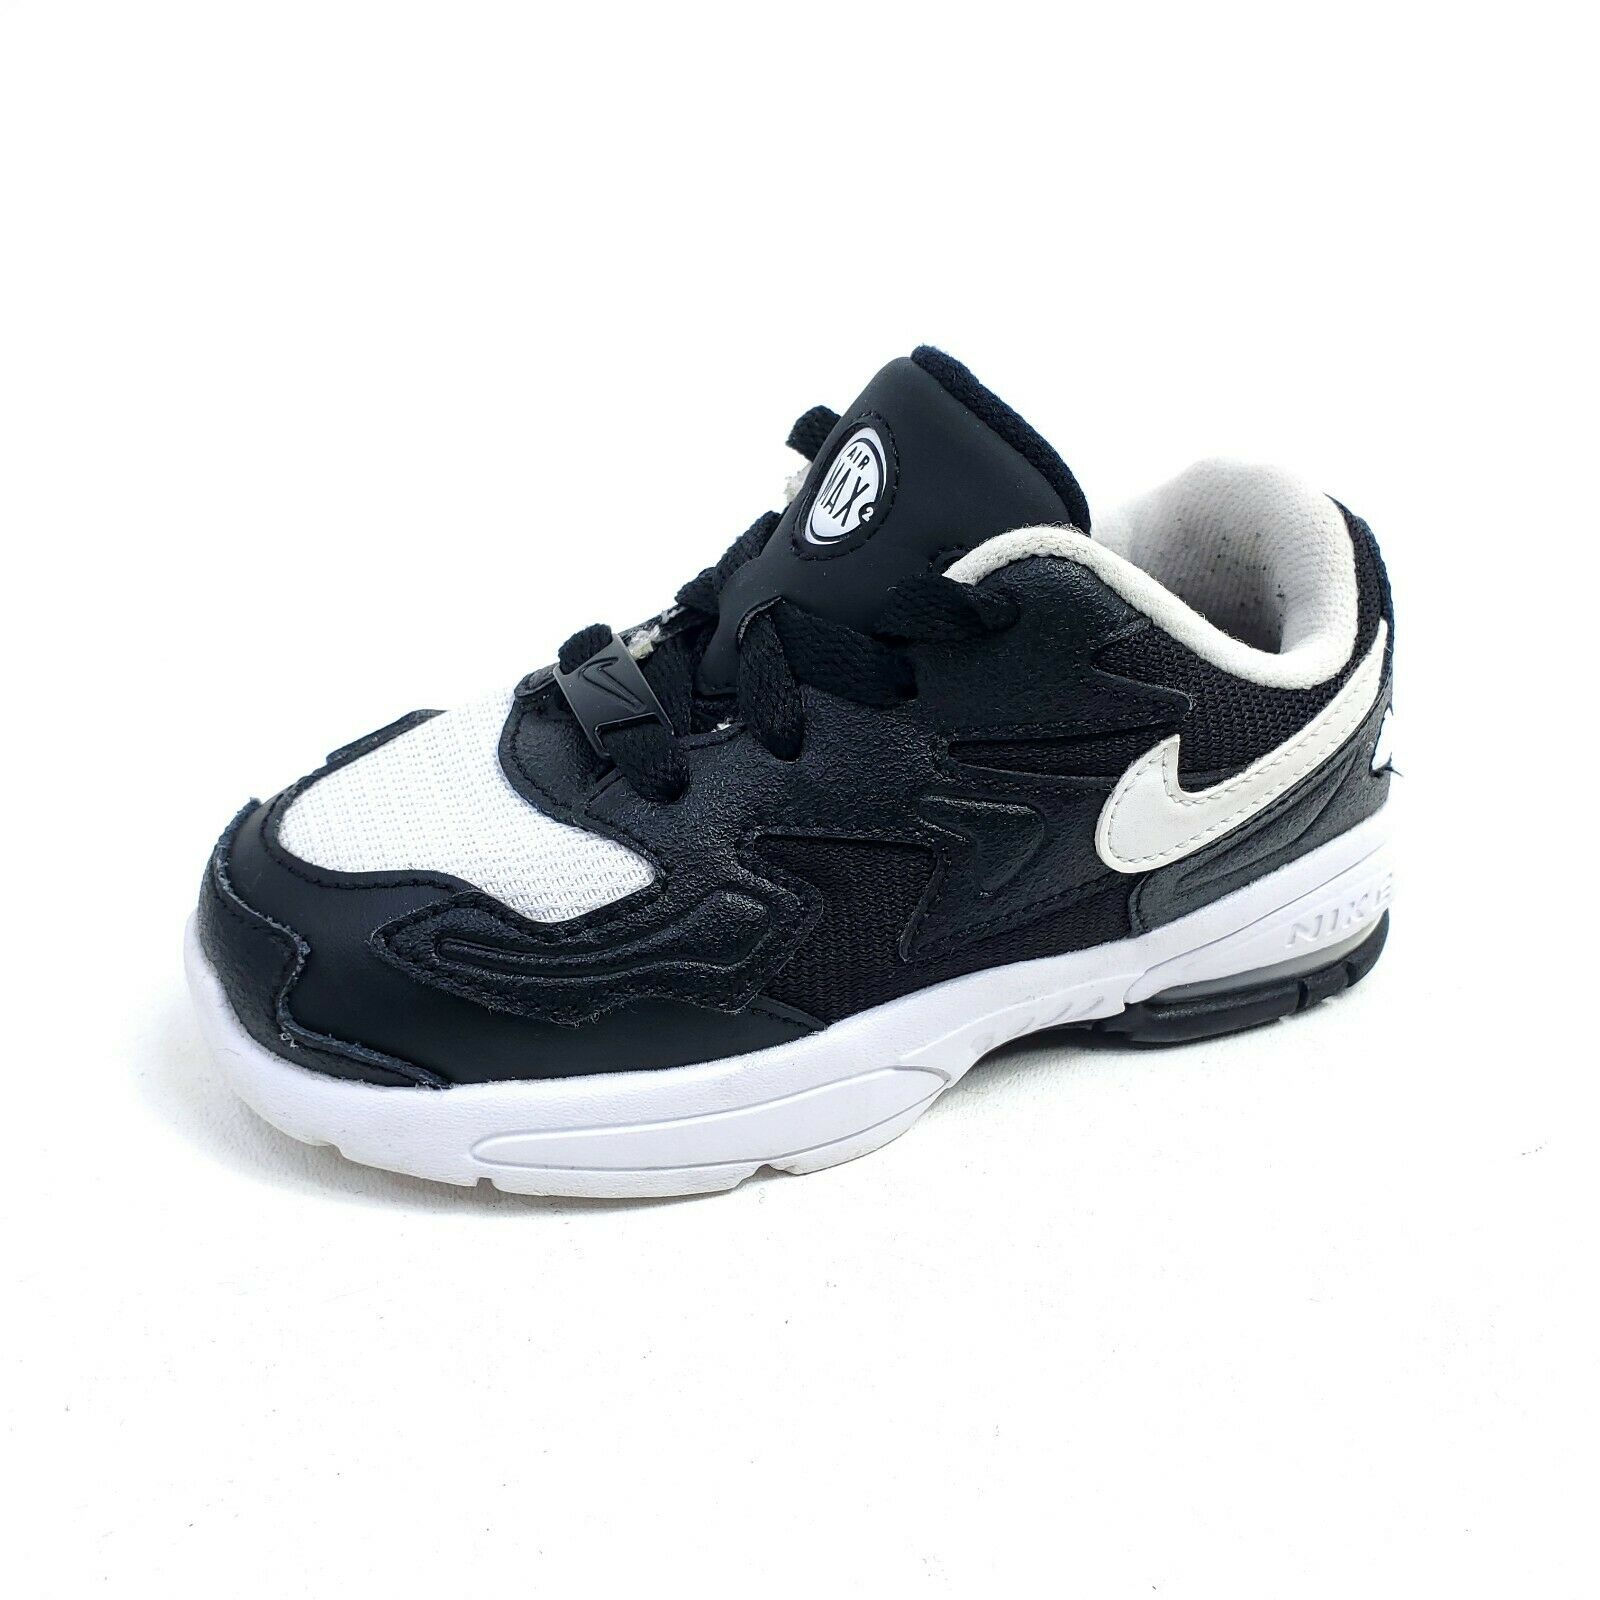 Nike Air Max2 Light Toddler 10C Shoes Black White CJ4028-001 Running Athletic